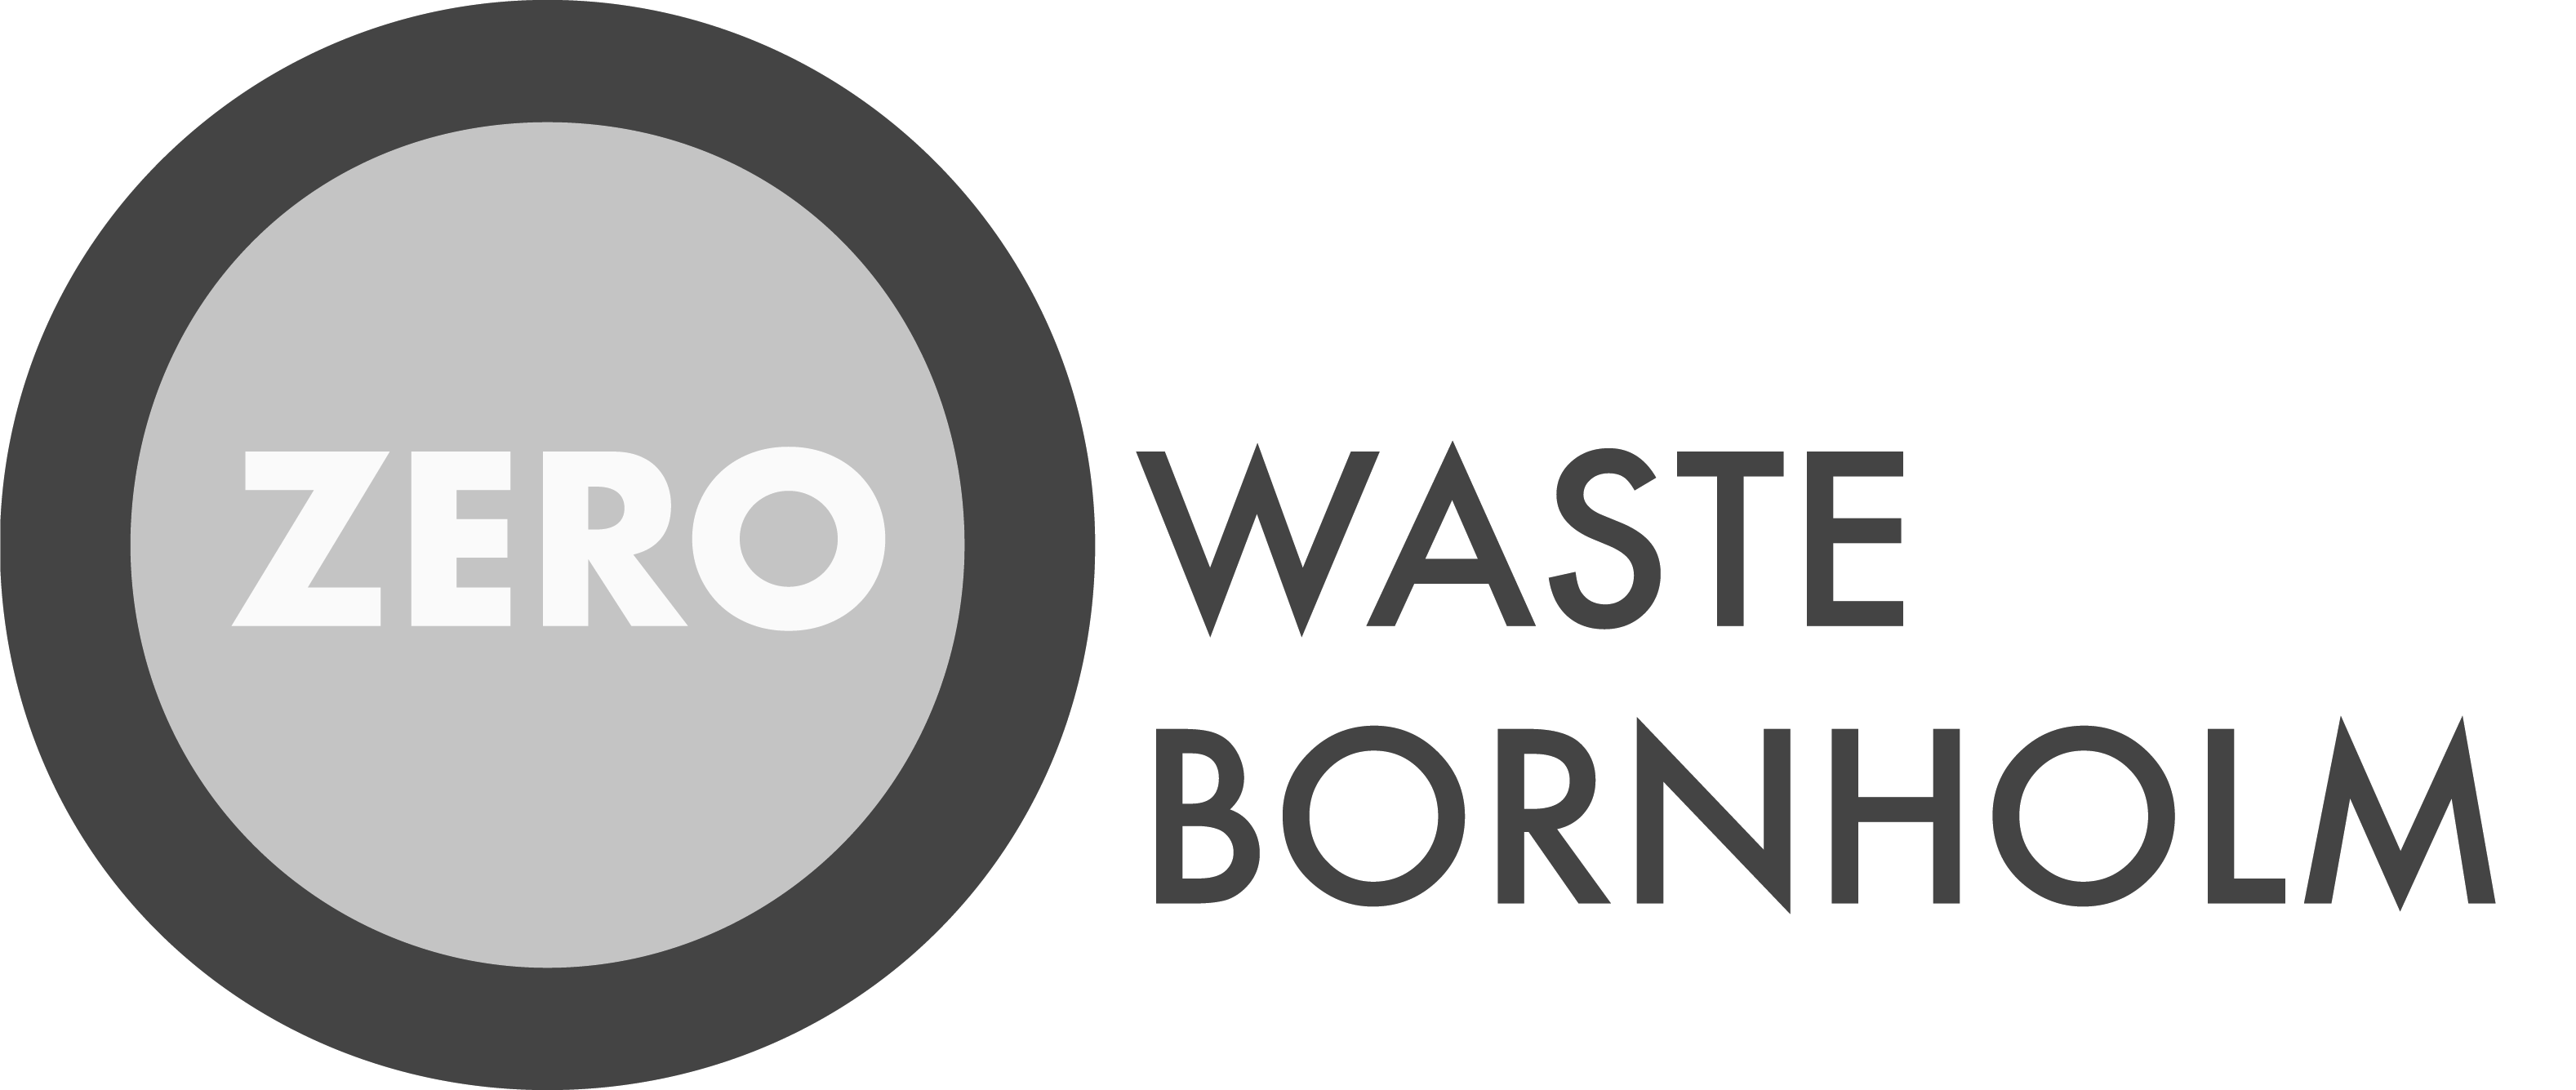 Zero Waste Bornholm